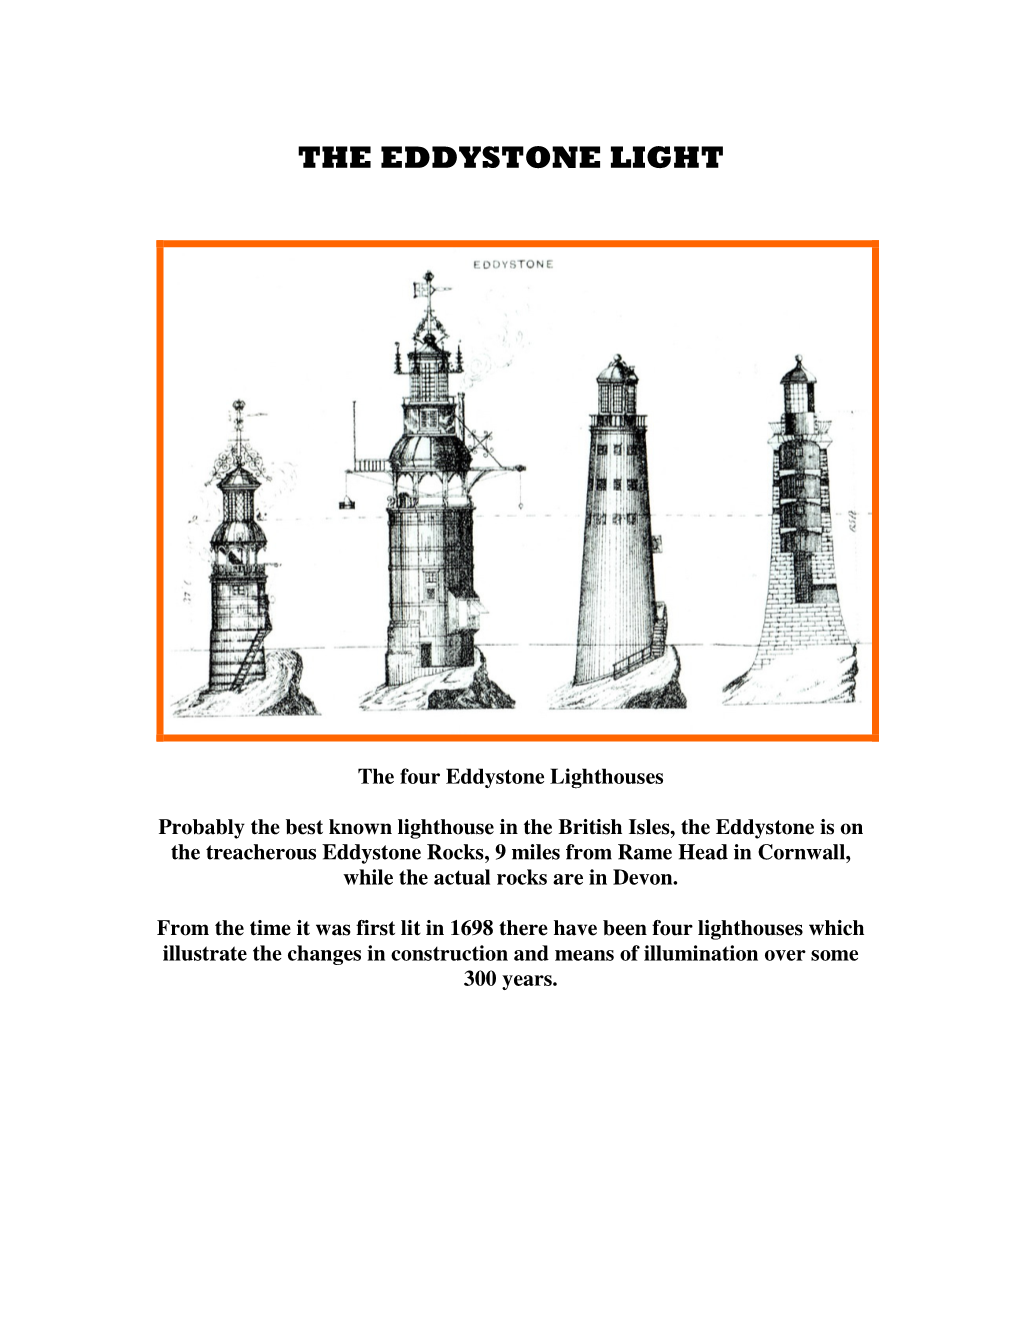 The Eddystone Light